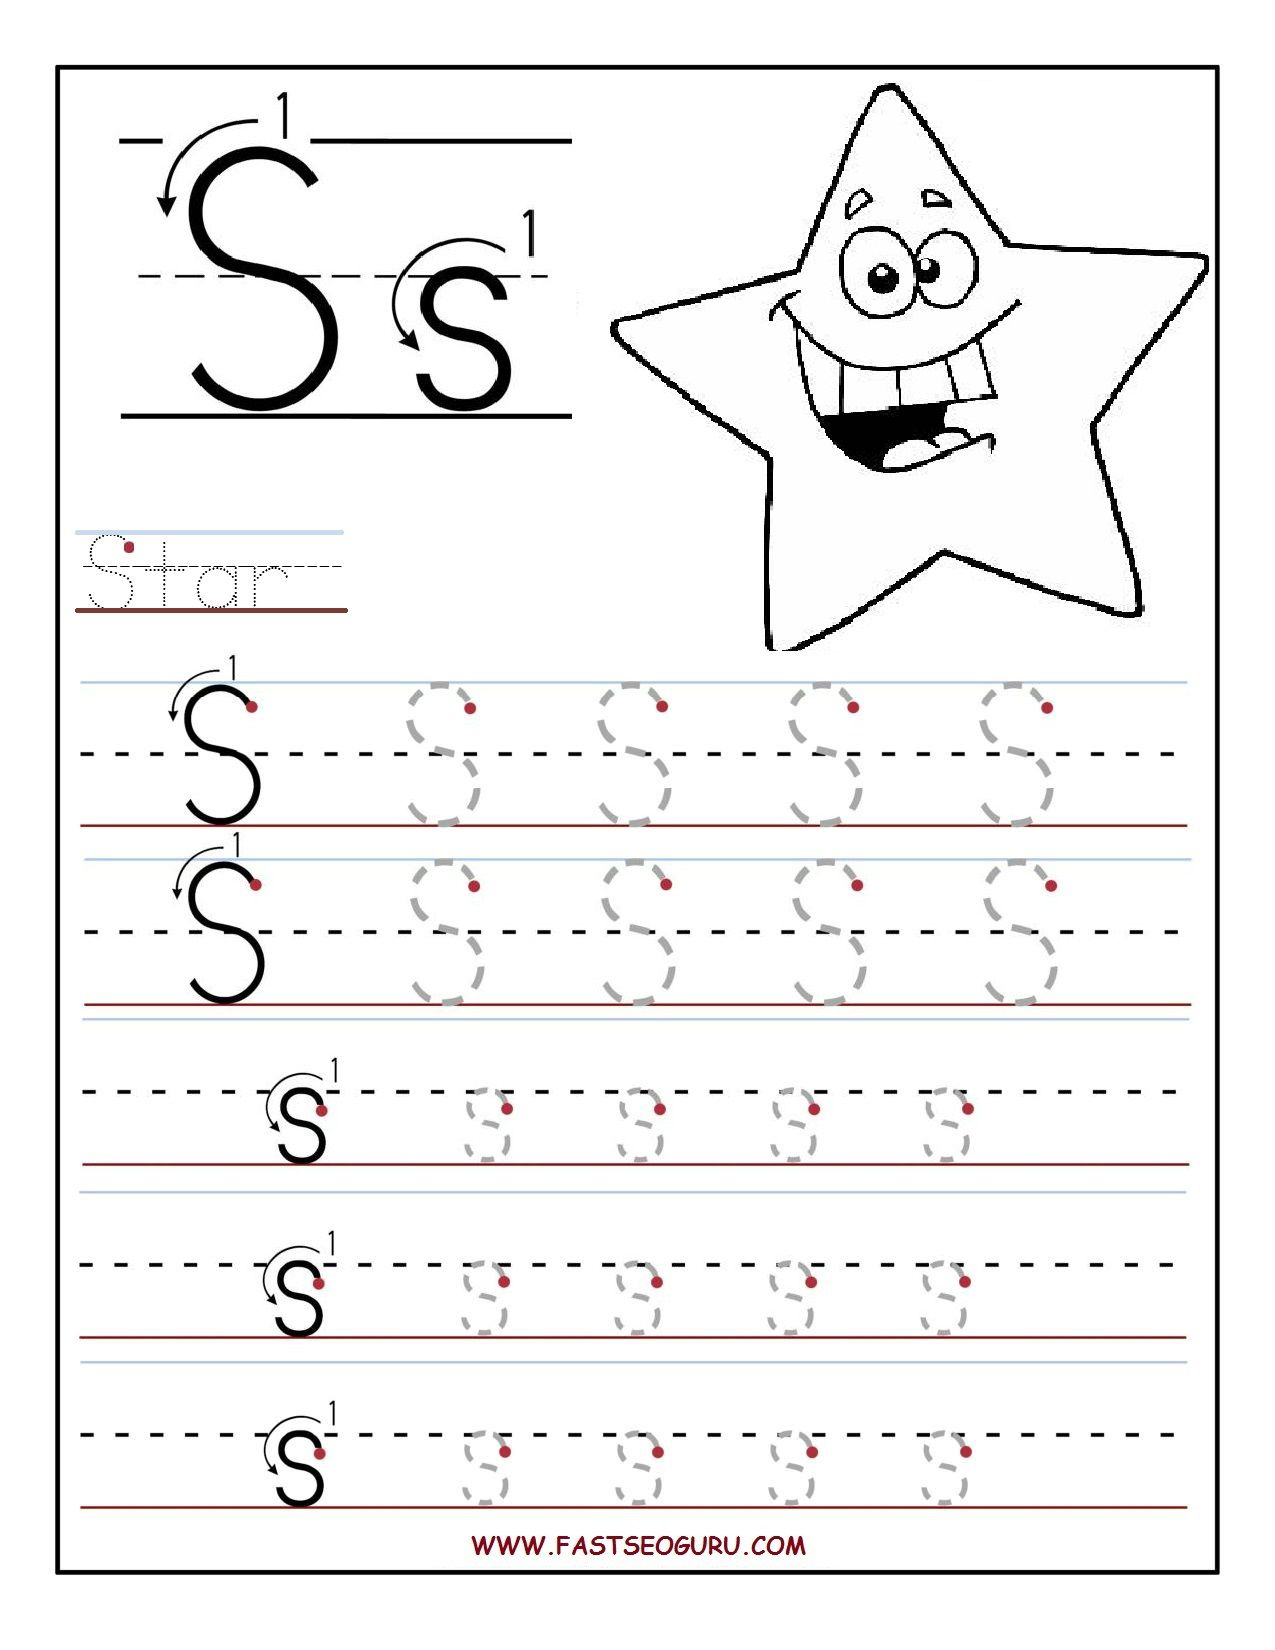 Printable Cursive Alphabet Worksheets Abitlikethis in Letter S Worksheets For Toddlers